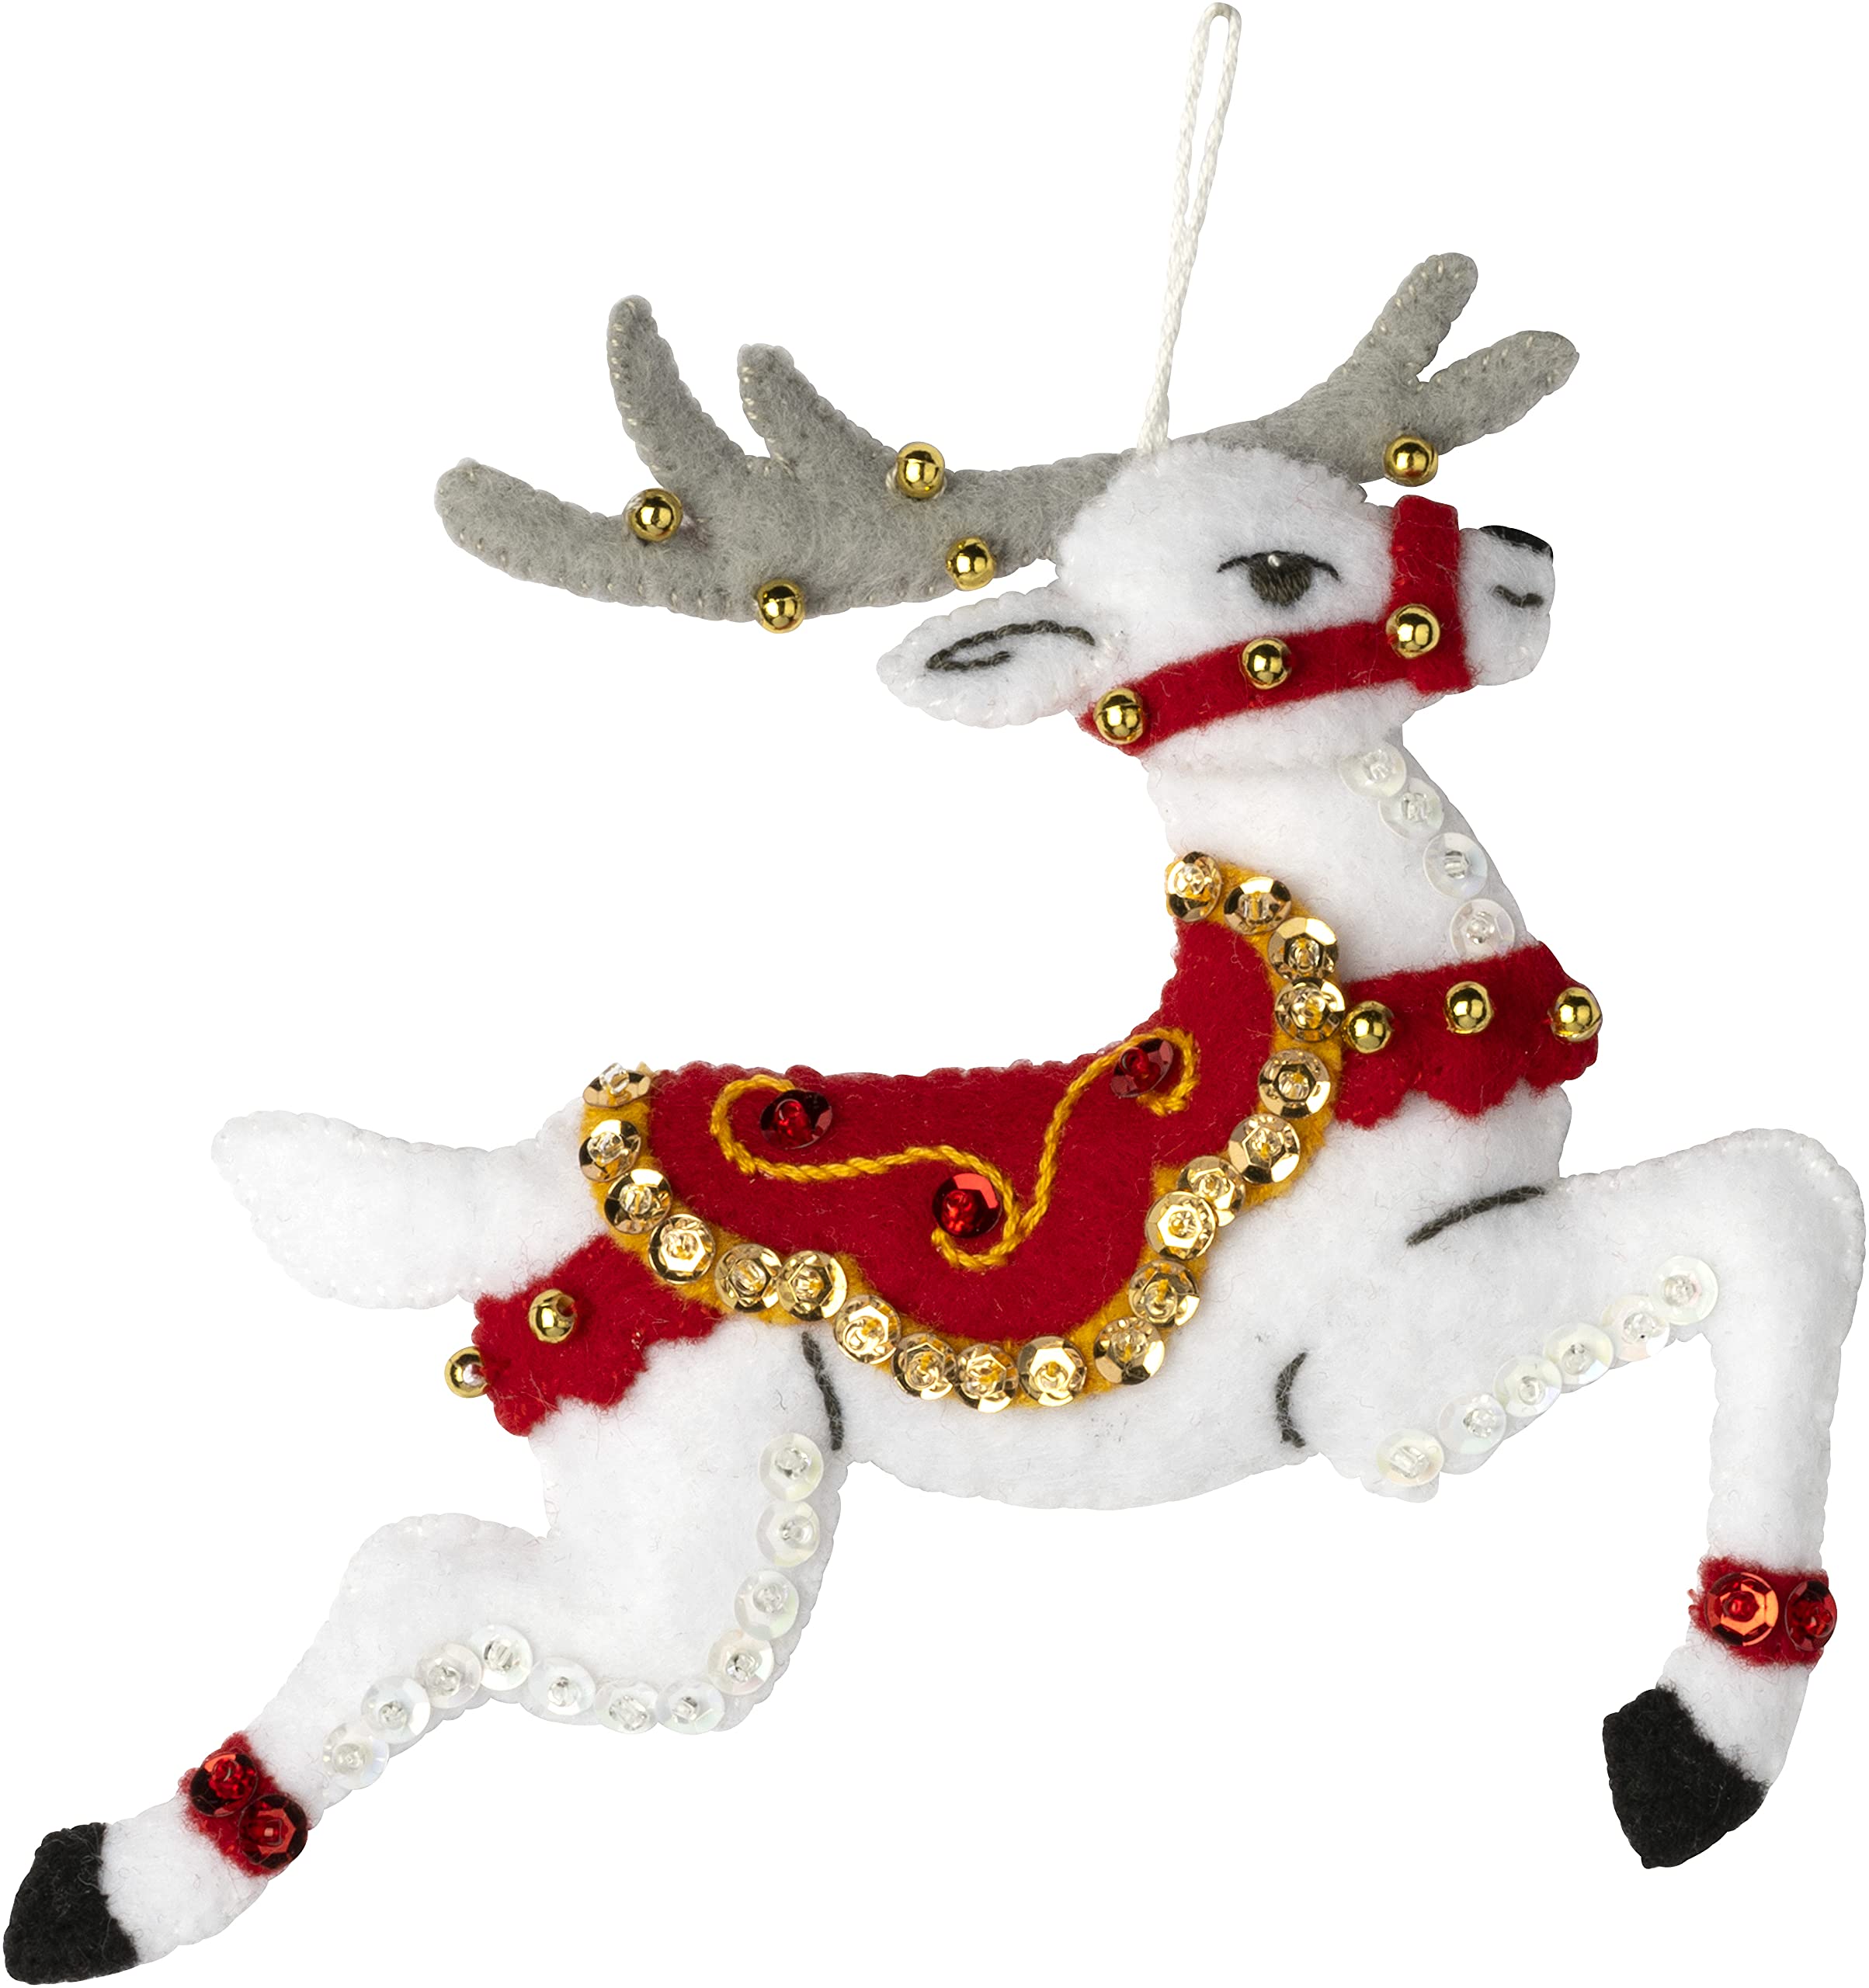 Bucilla Felt Applique 6 Piece Ornament Making Kit, Festive Reindeer, Perfect for DIY Arts and Crafts, 89299E